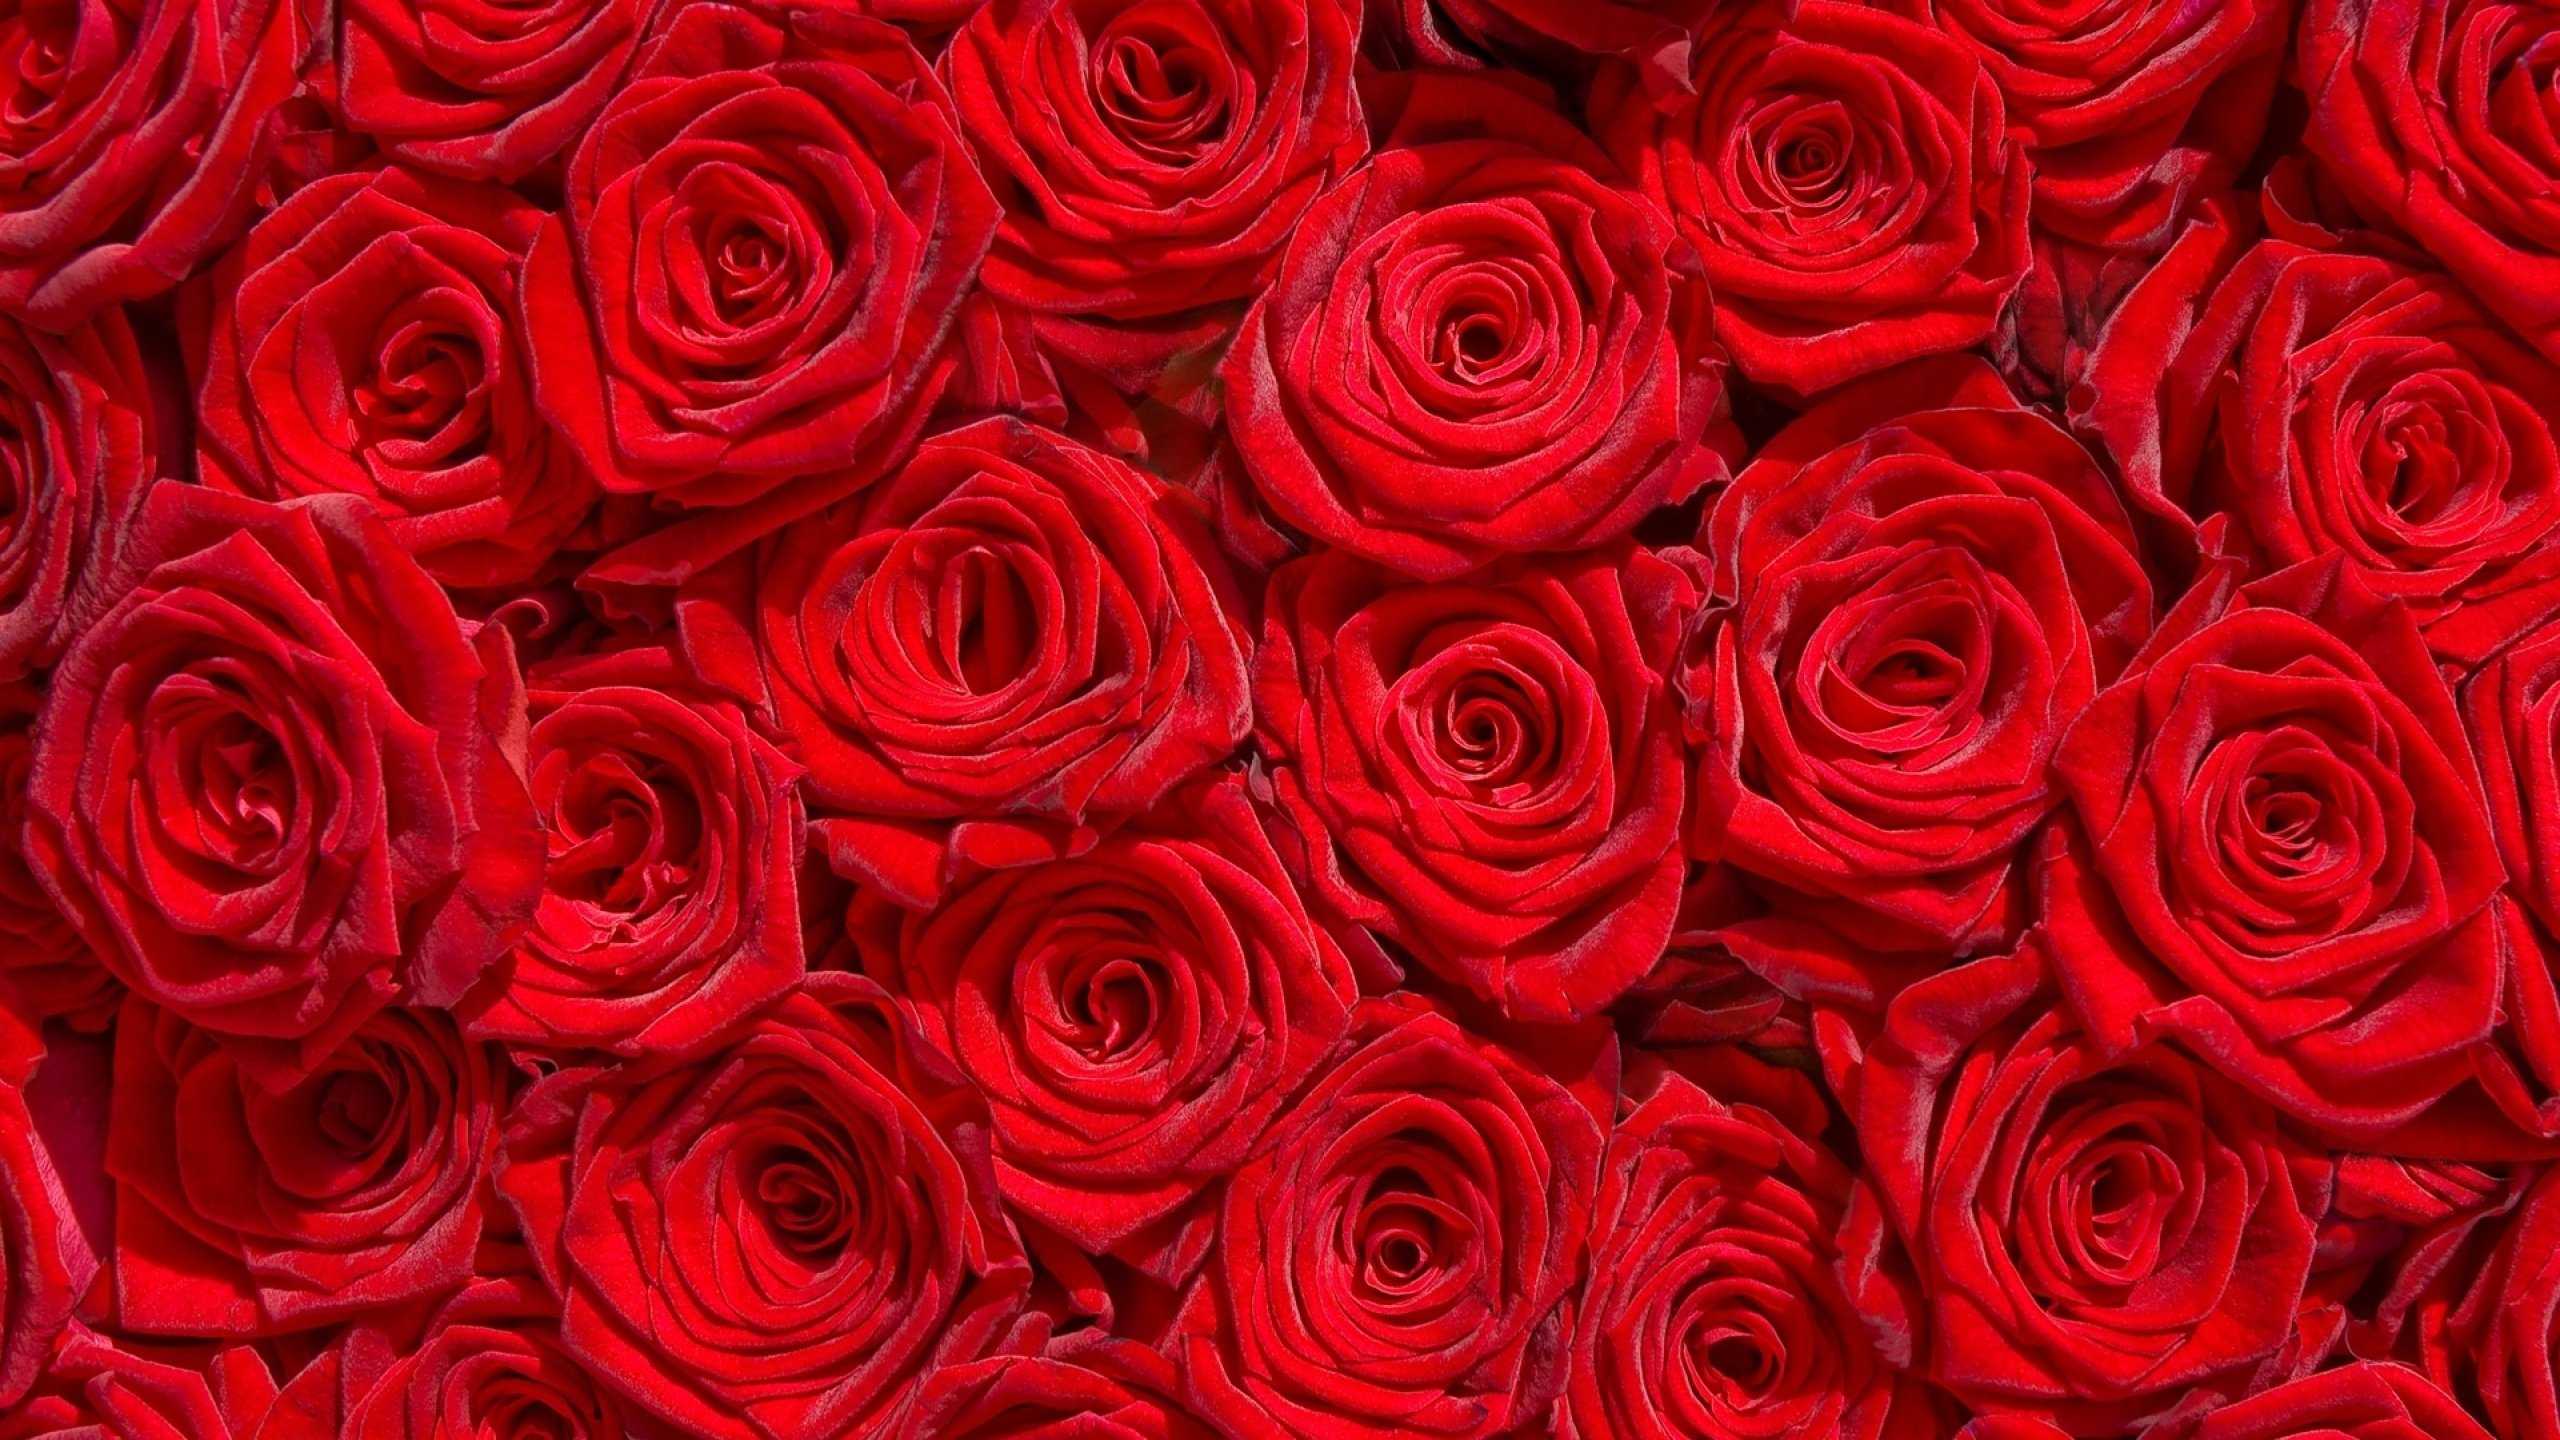 Rose Flower Garden Images Hd Natural Rose Flower Garden Free Stock Photos Download Free